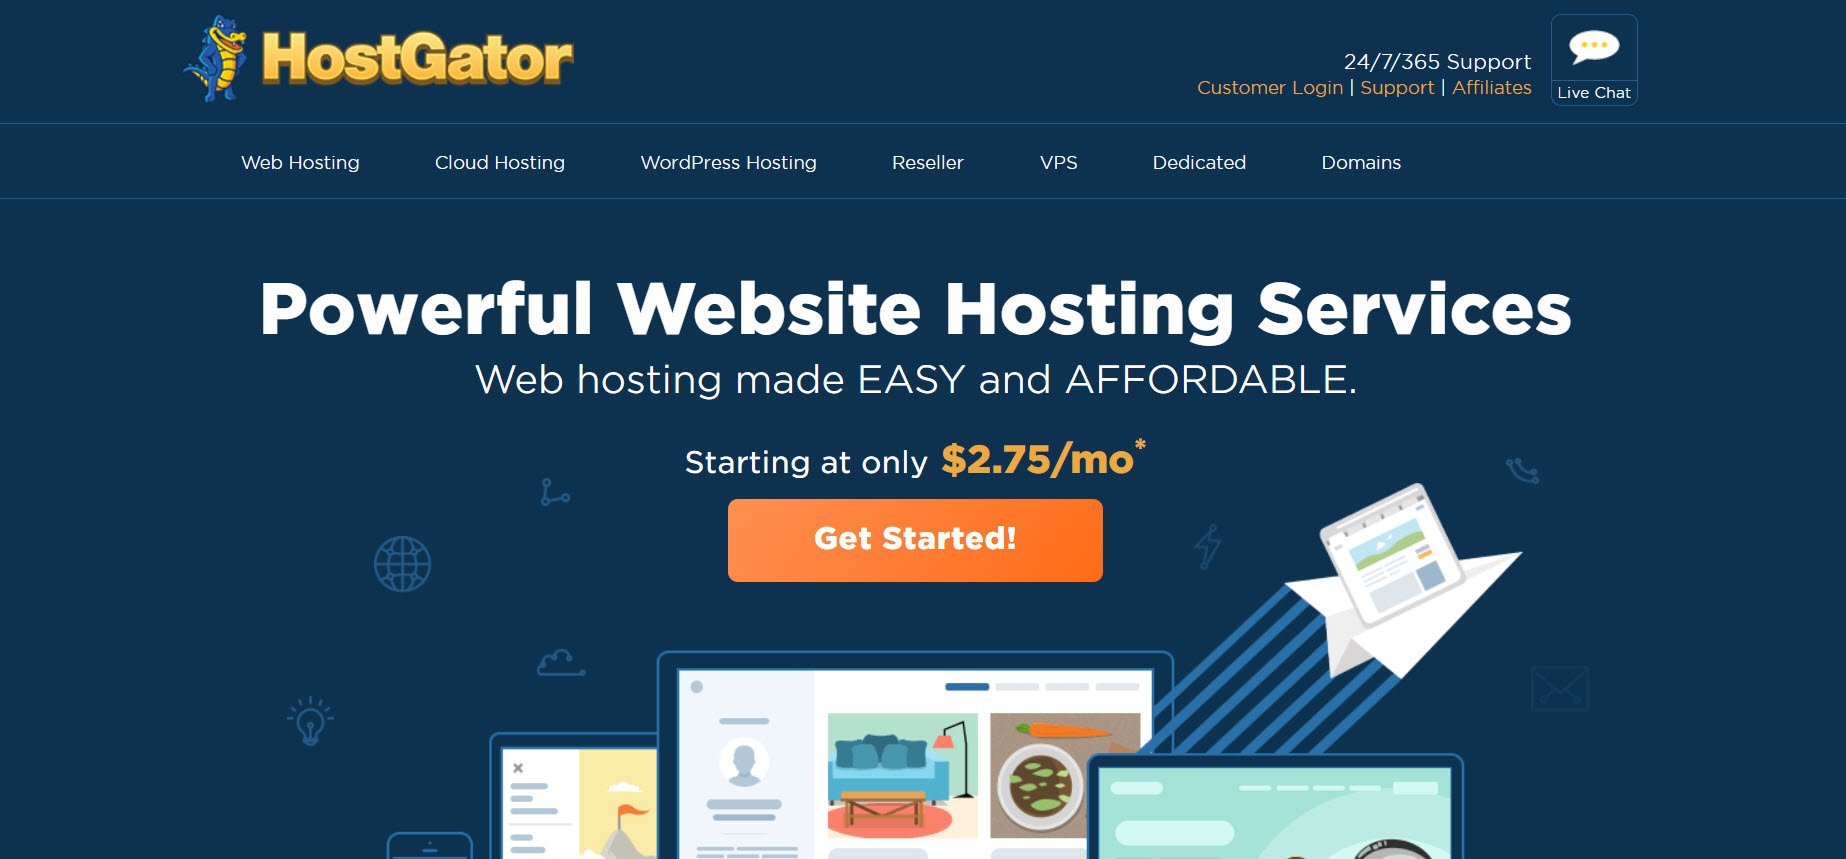 hostgator hosting